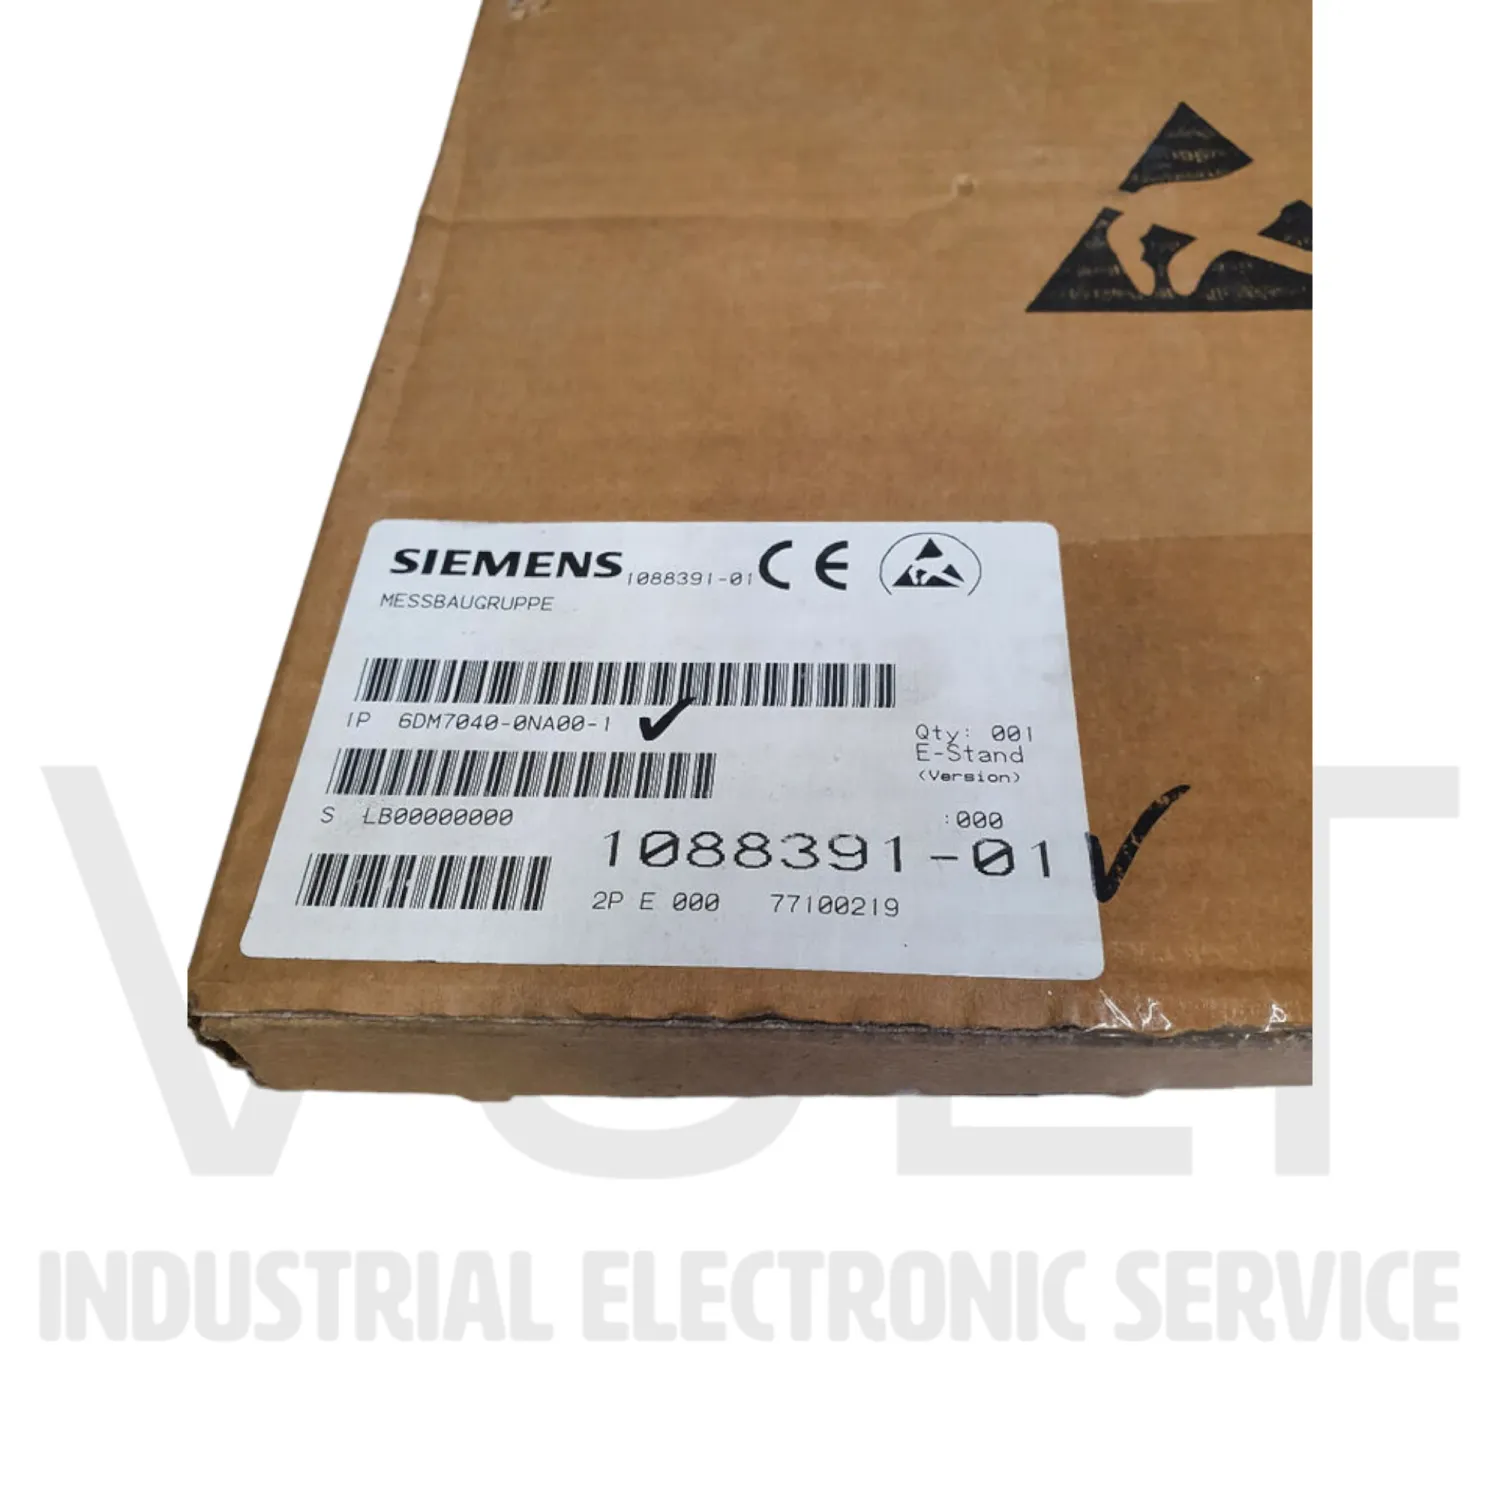 Siemens 6DM7040-0NA00